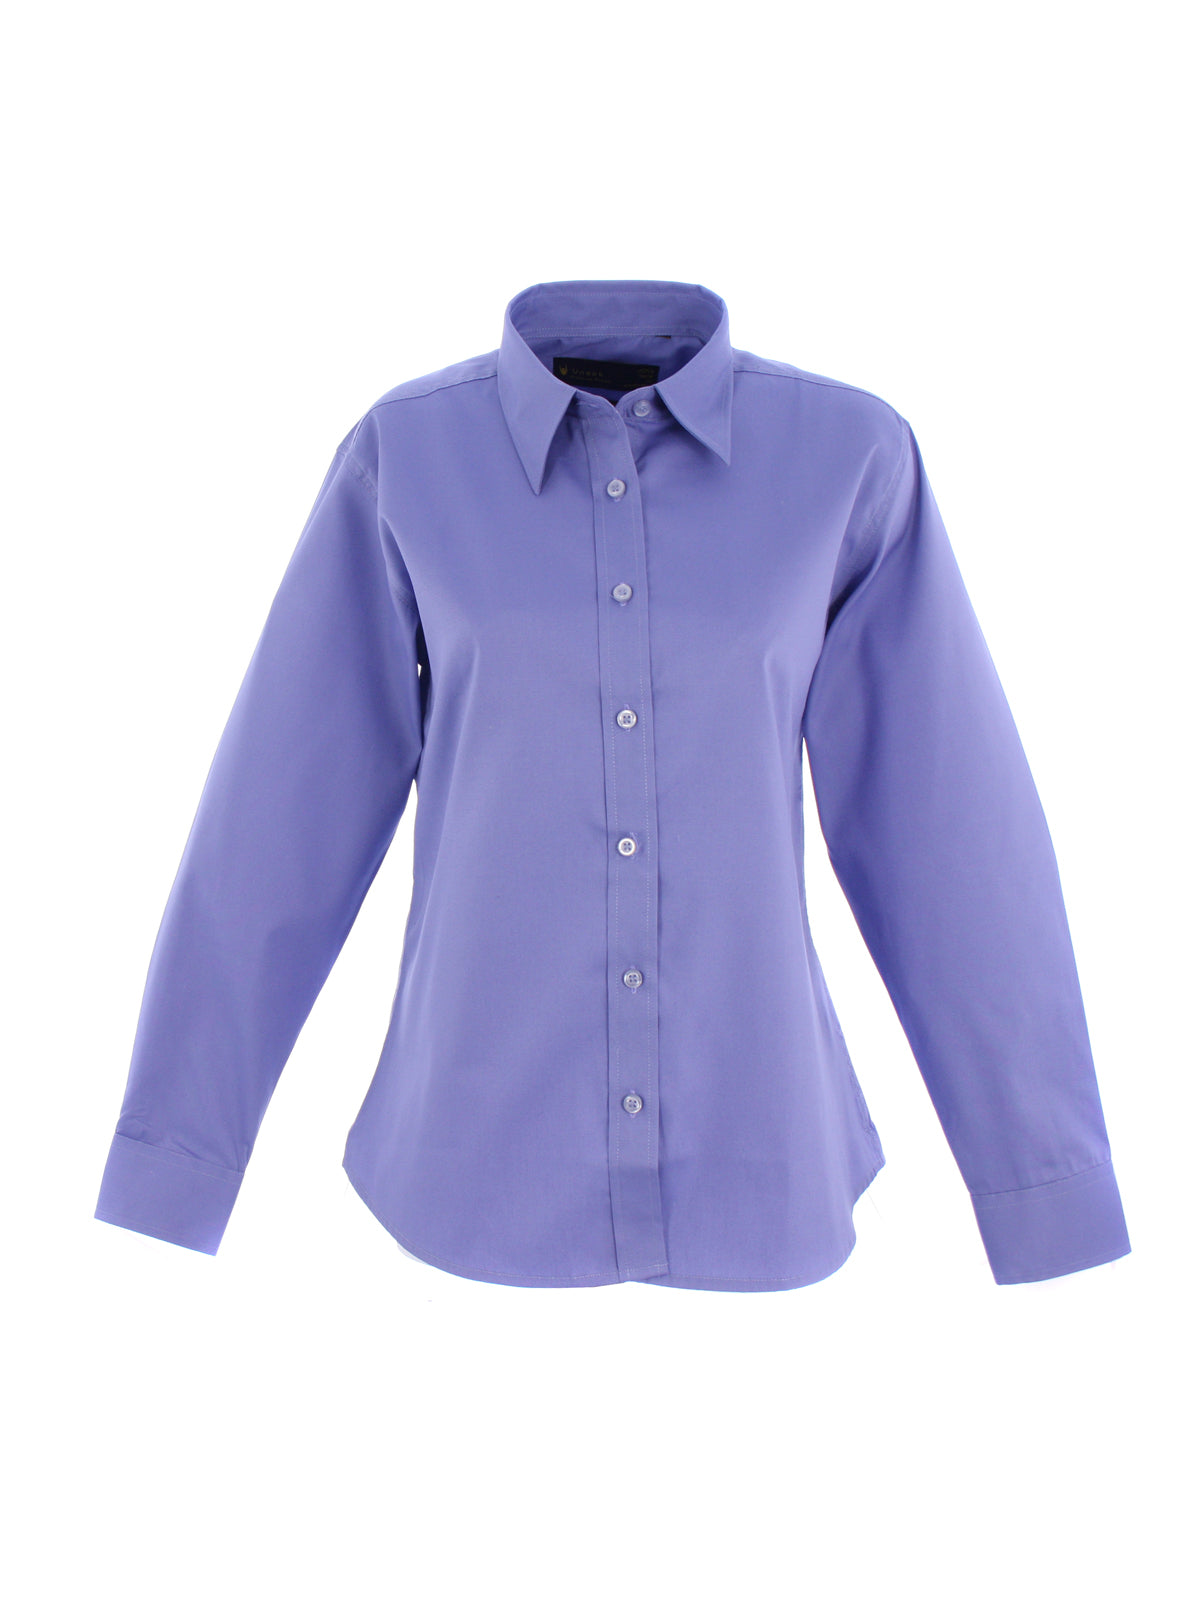 Uneek Ladies Pinpoint Oxford Full Sleeve Shirt UC703 - Mid Blue